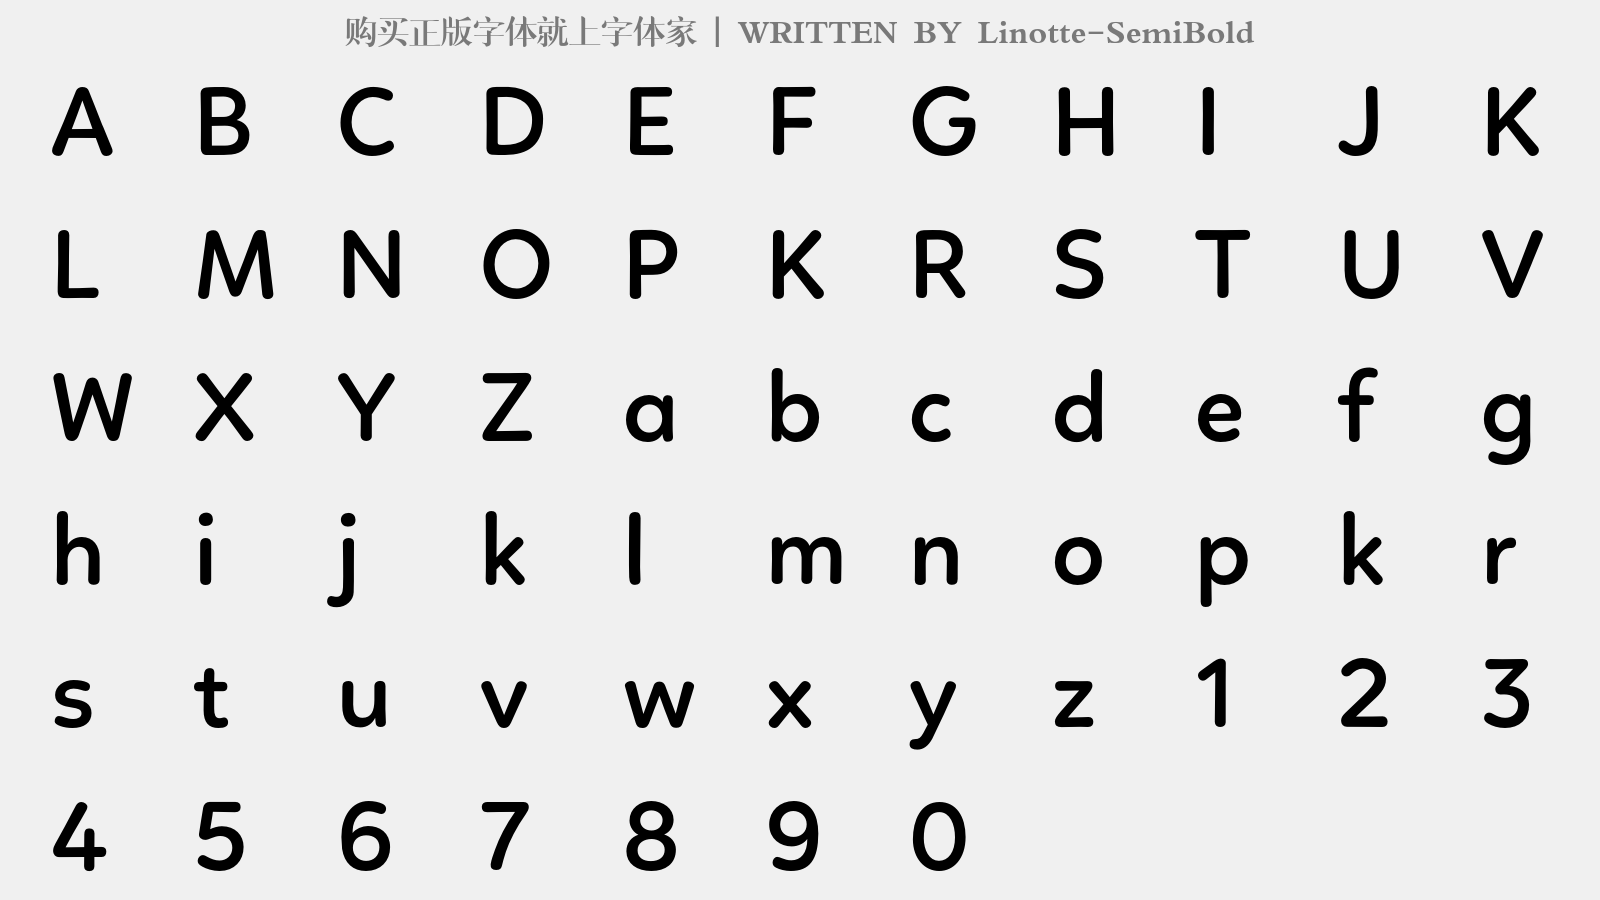 Linotte-SemiBold - 大写字母/小写字母/数字